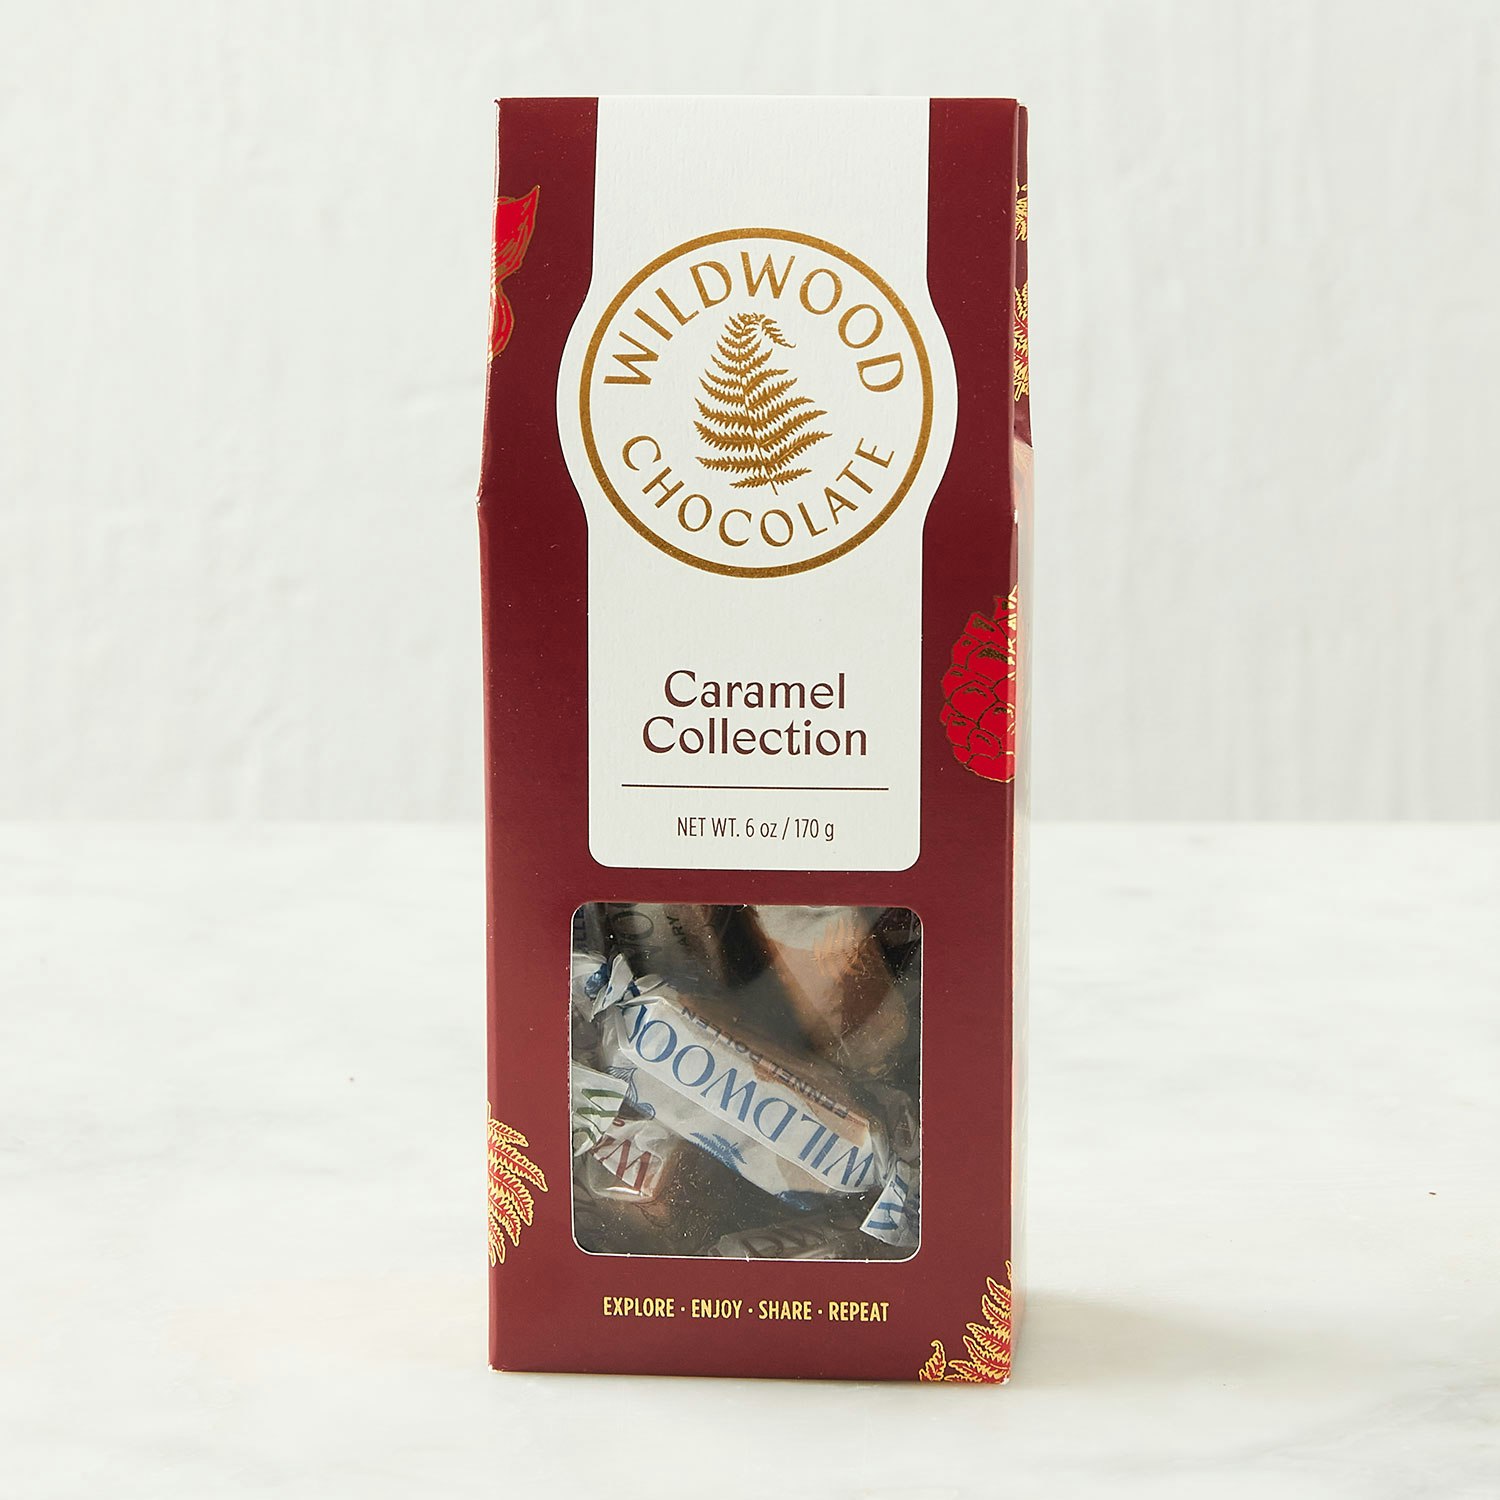 Wildwood Chocolate Original Caramel Collection specialty foods